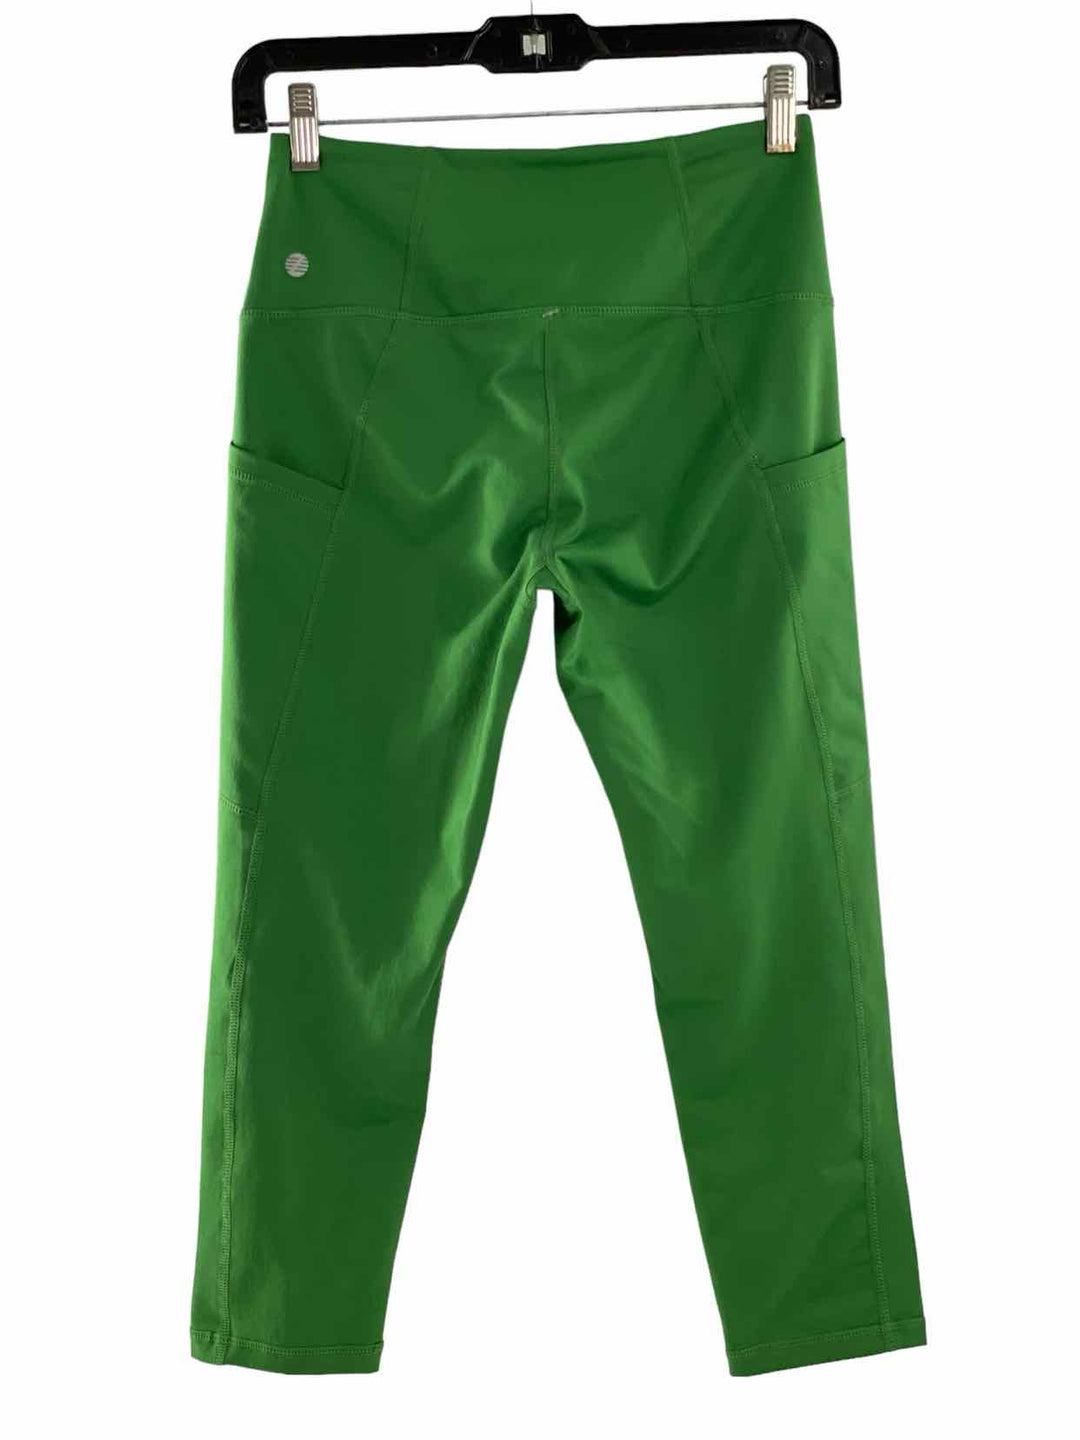 Zella Size S Green Athletic Pants